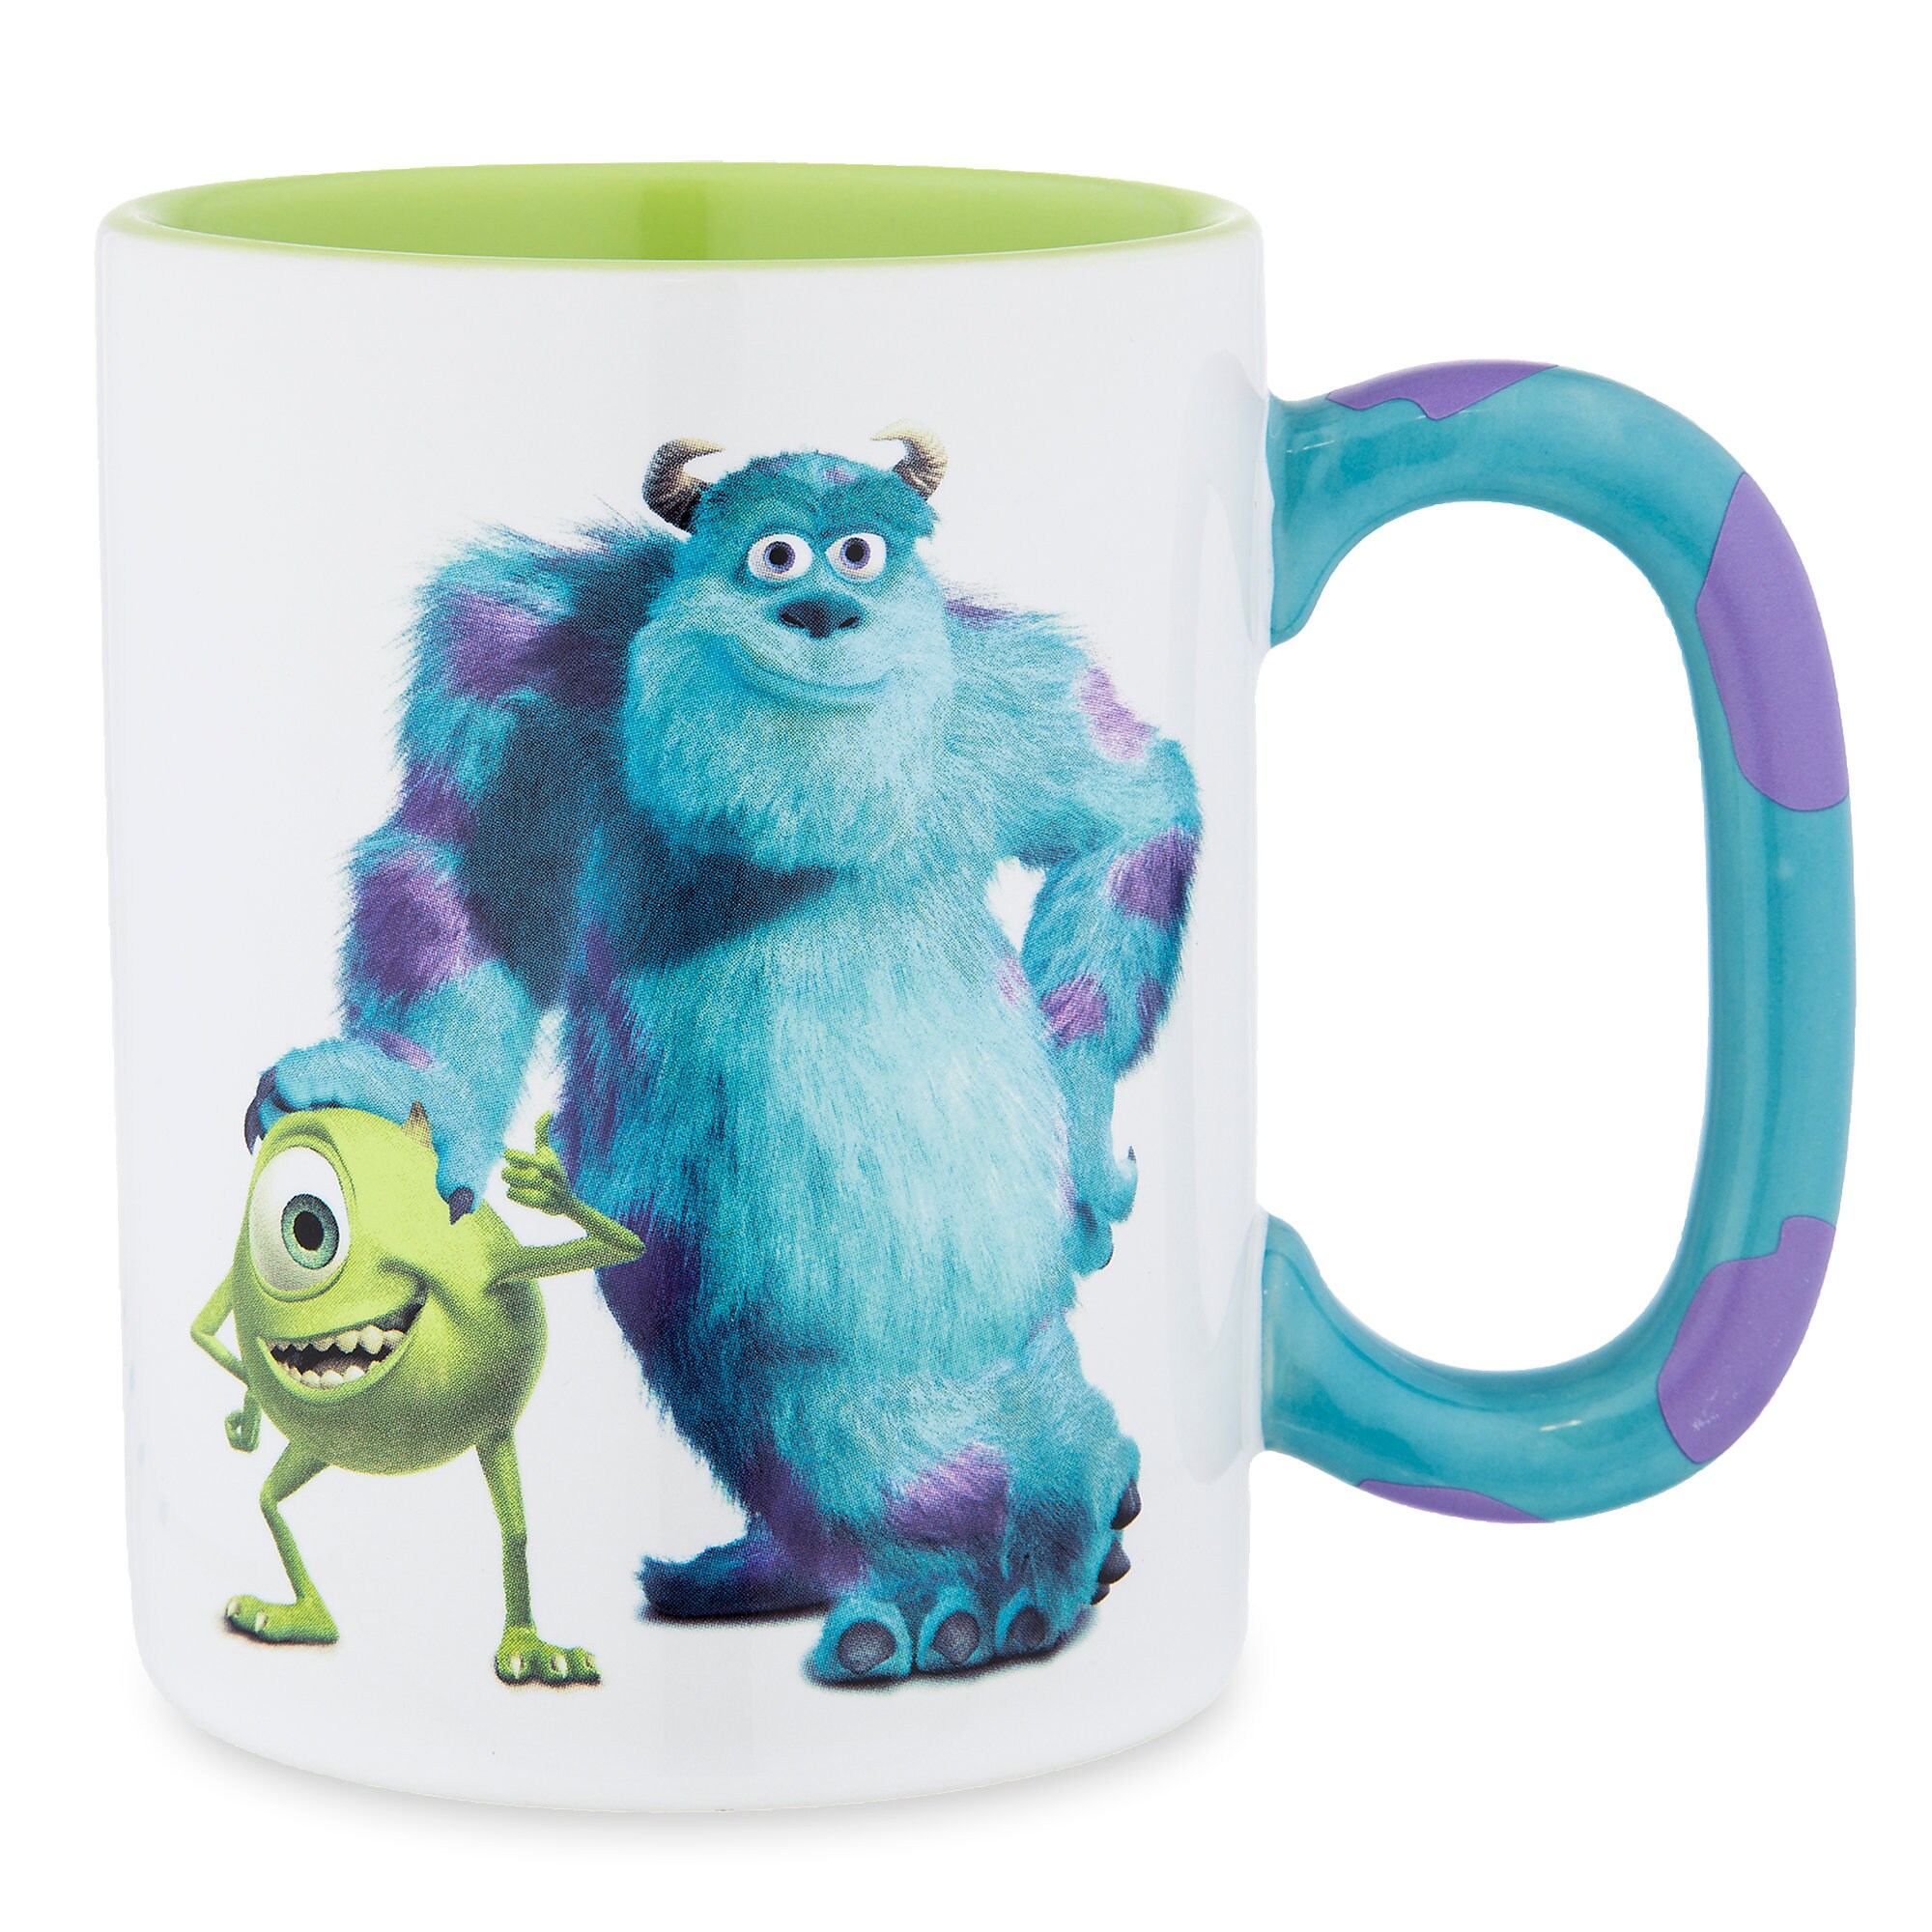 Mike Wazowski and Sulley Mug - Monsters, Inc.